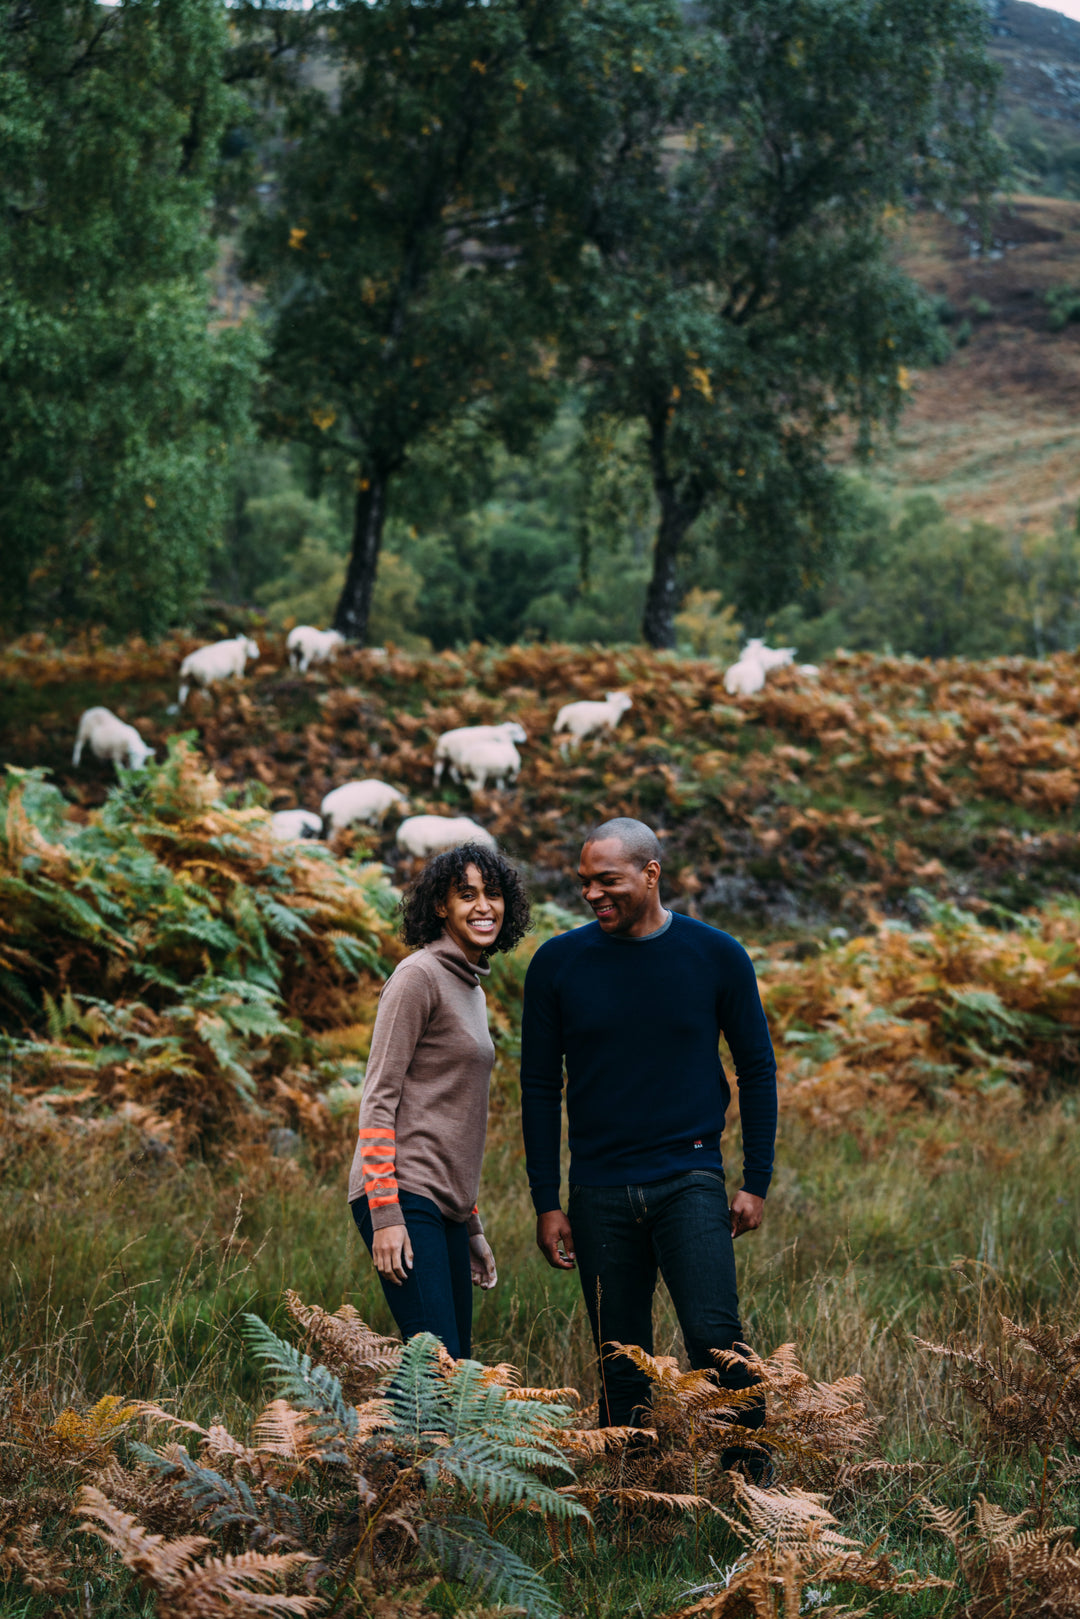 Isobaa Merino - Strolling through a field of Sheep